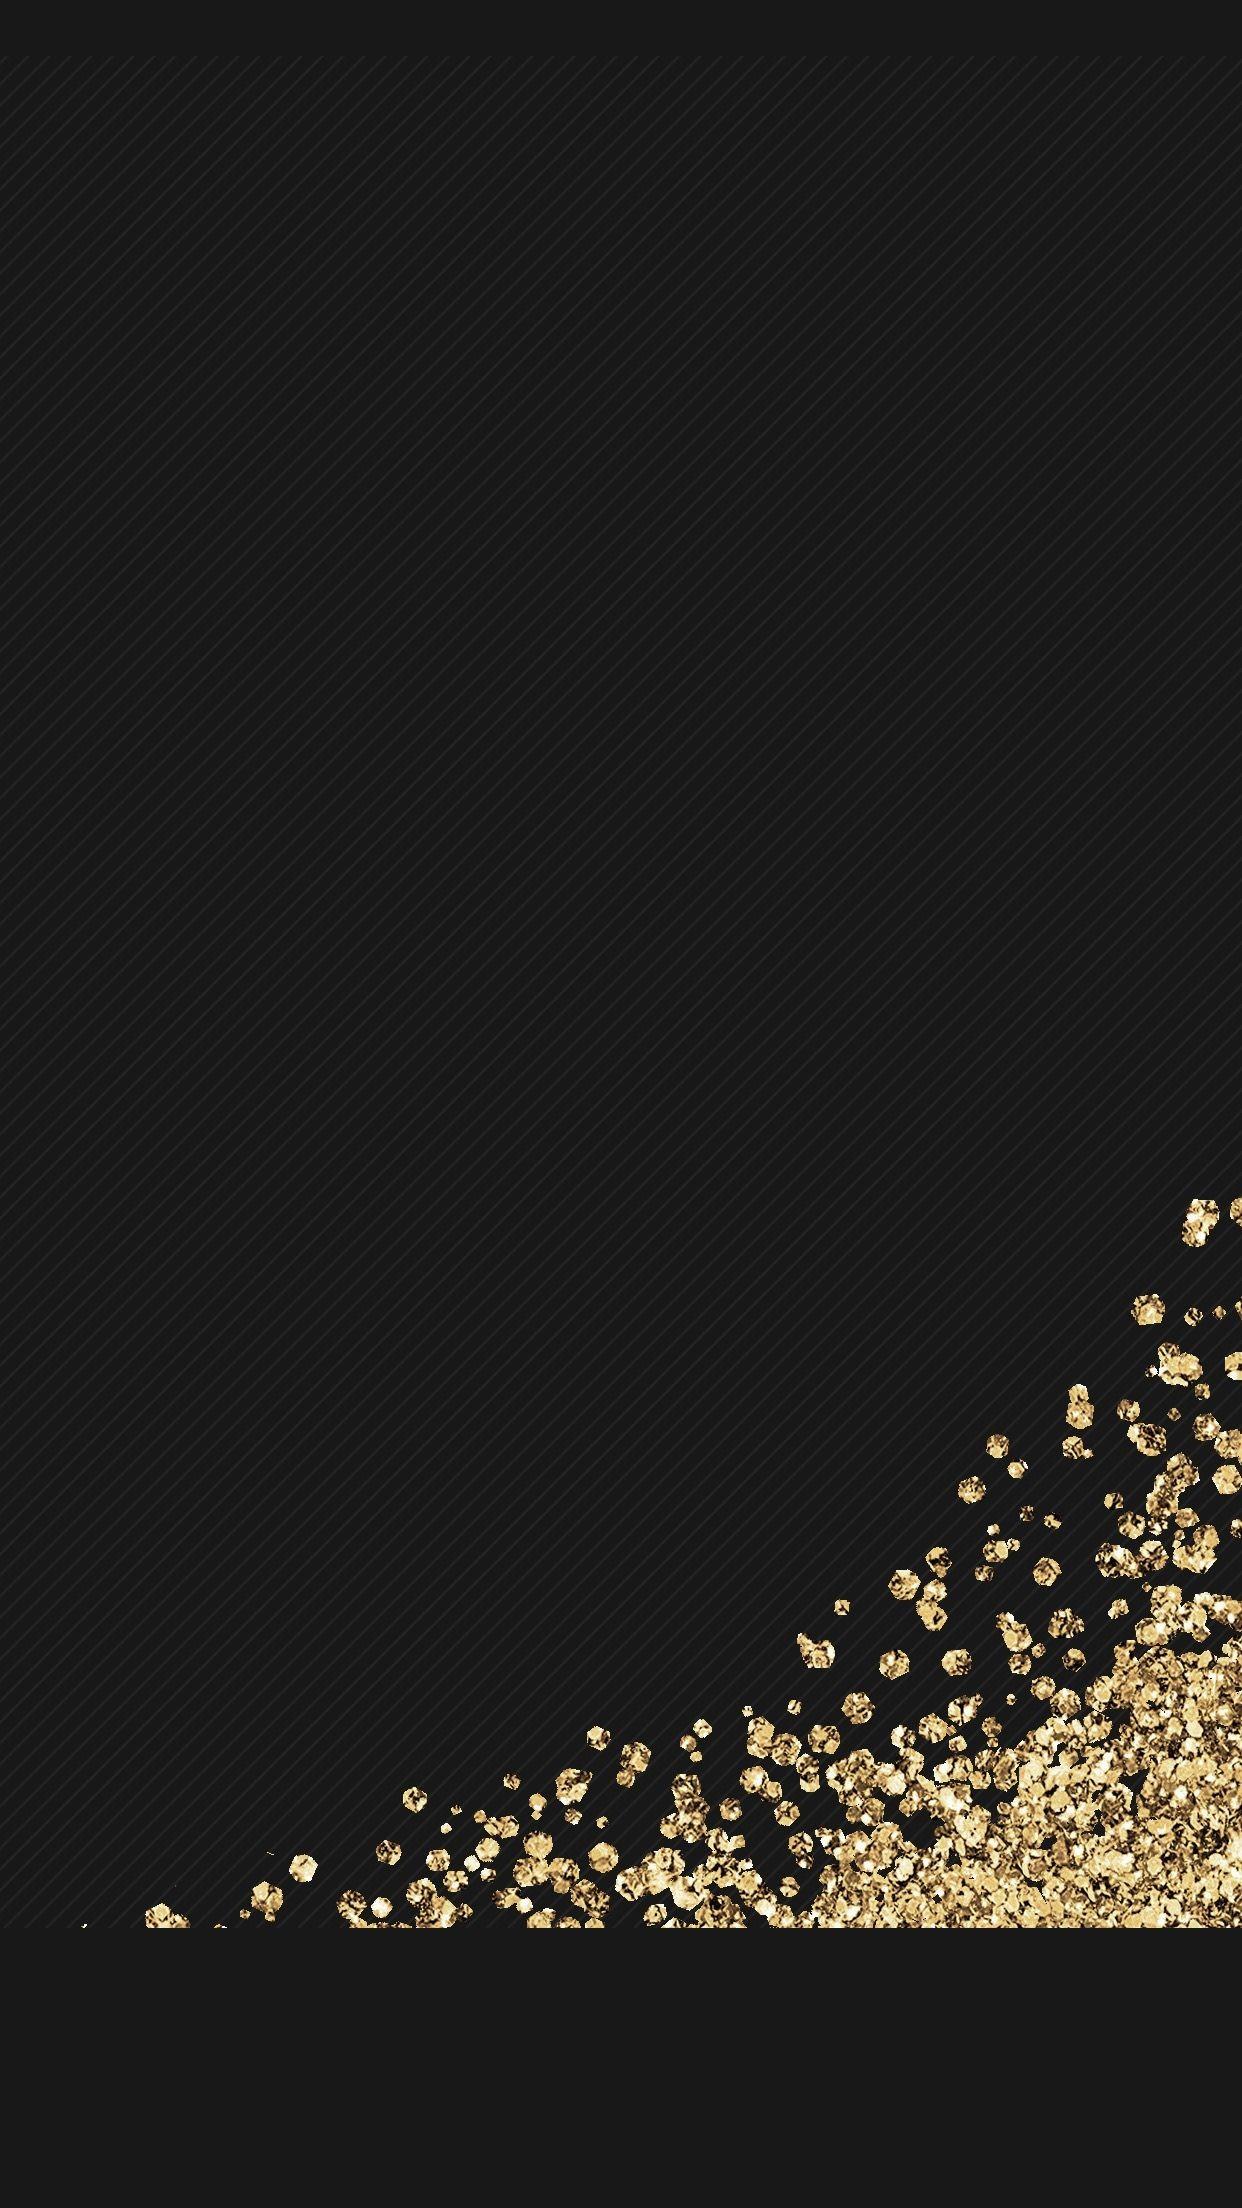 Black and Gold Desktop Wallpaper